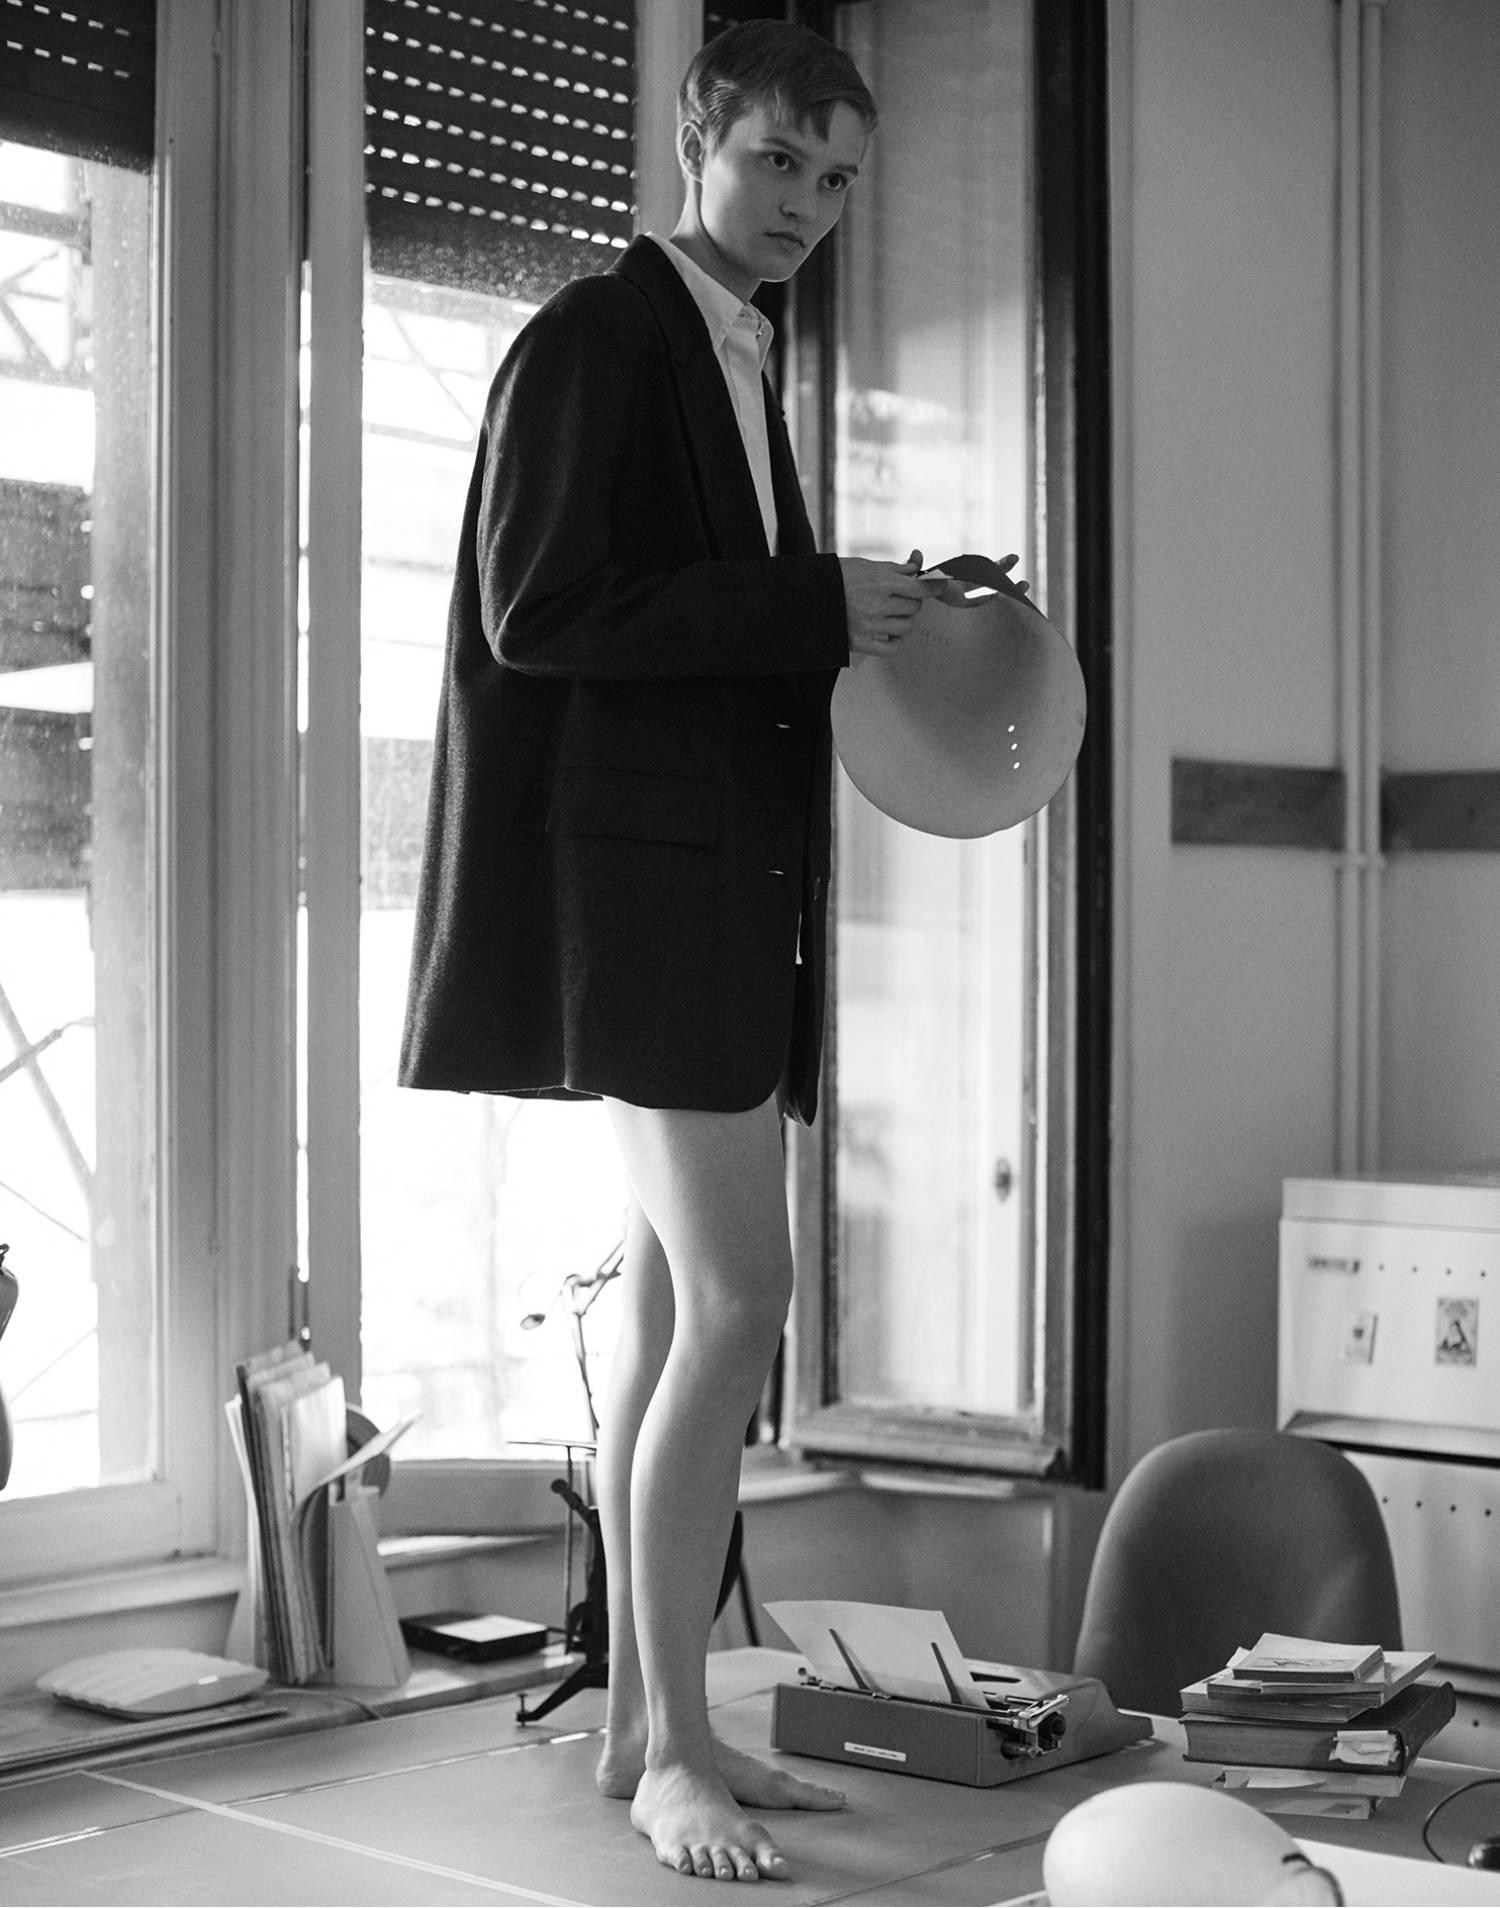 Sofia Hansson by Stefano Galuzzi for Marie Claire Italia November 2021 Clothing: Viscose blazer by Soallure; Cotton shirt by Moi Mimi